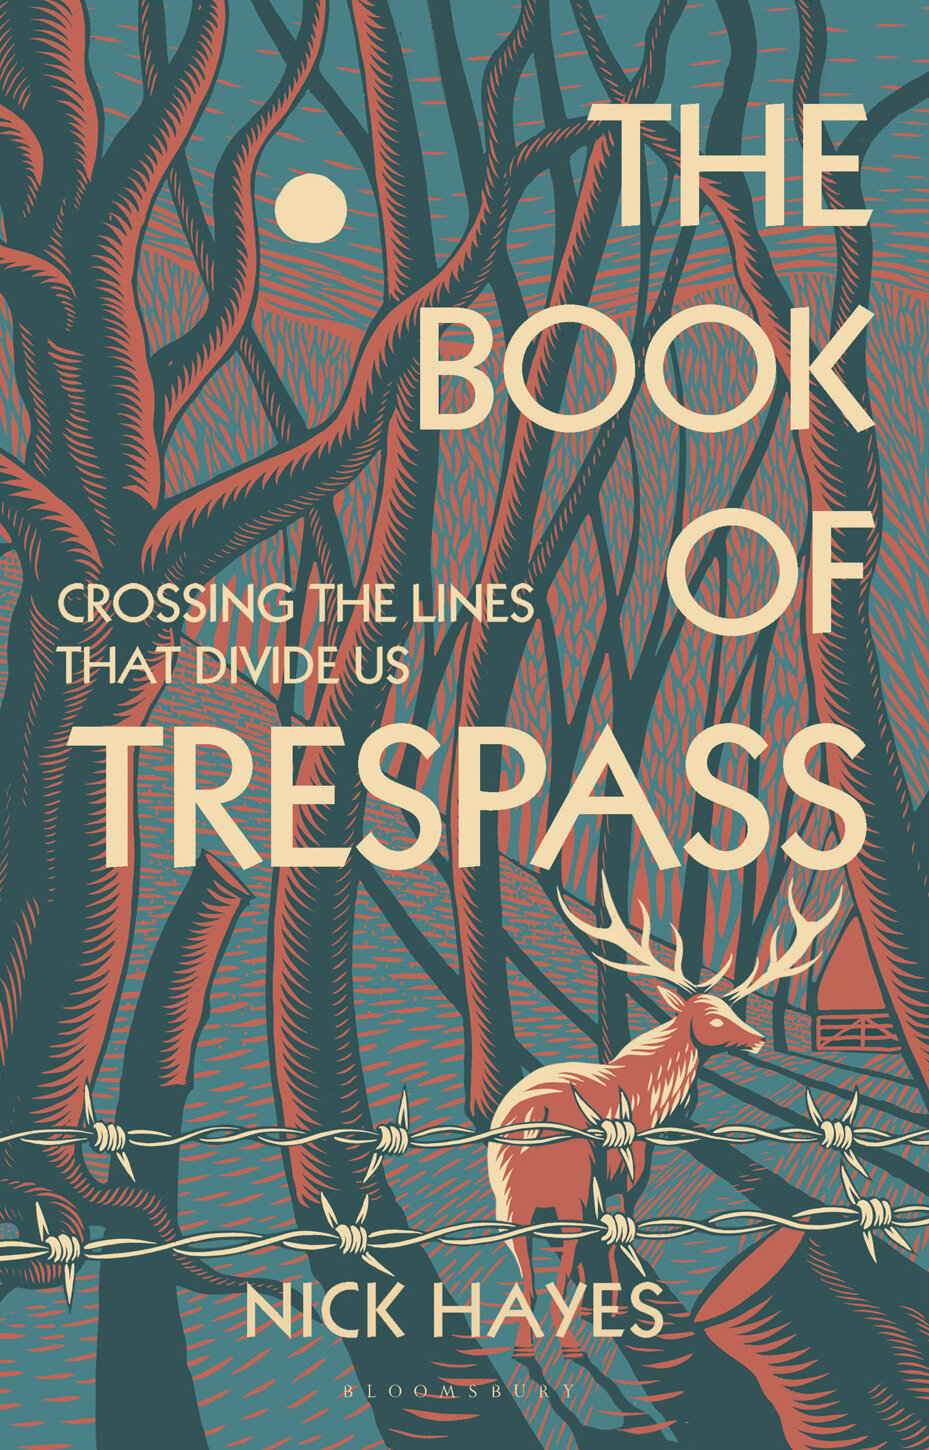 Nick-Hayes-Folio-Art-Publishing-Nature-Illustration-Bloomsbury-Trespass-Book-Cover.jpg